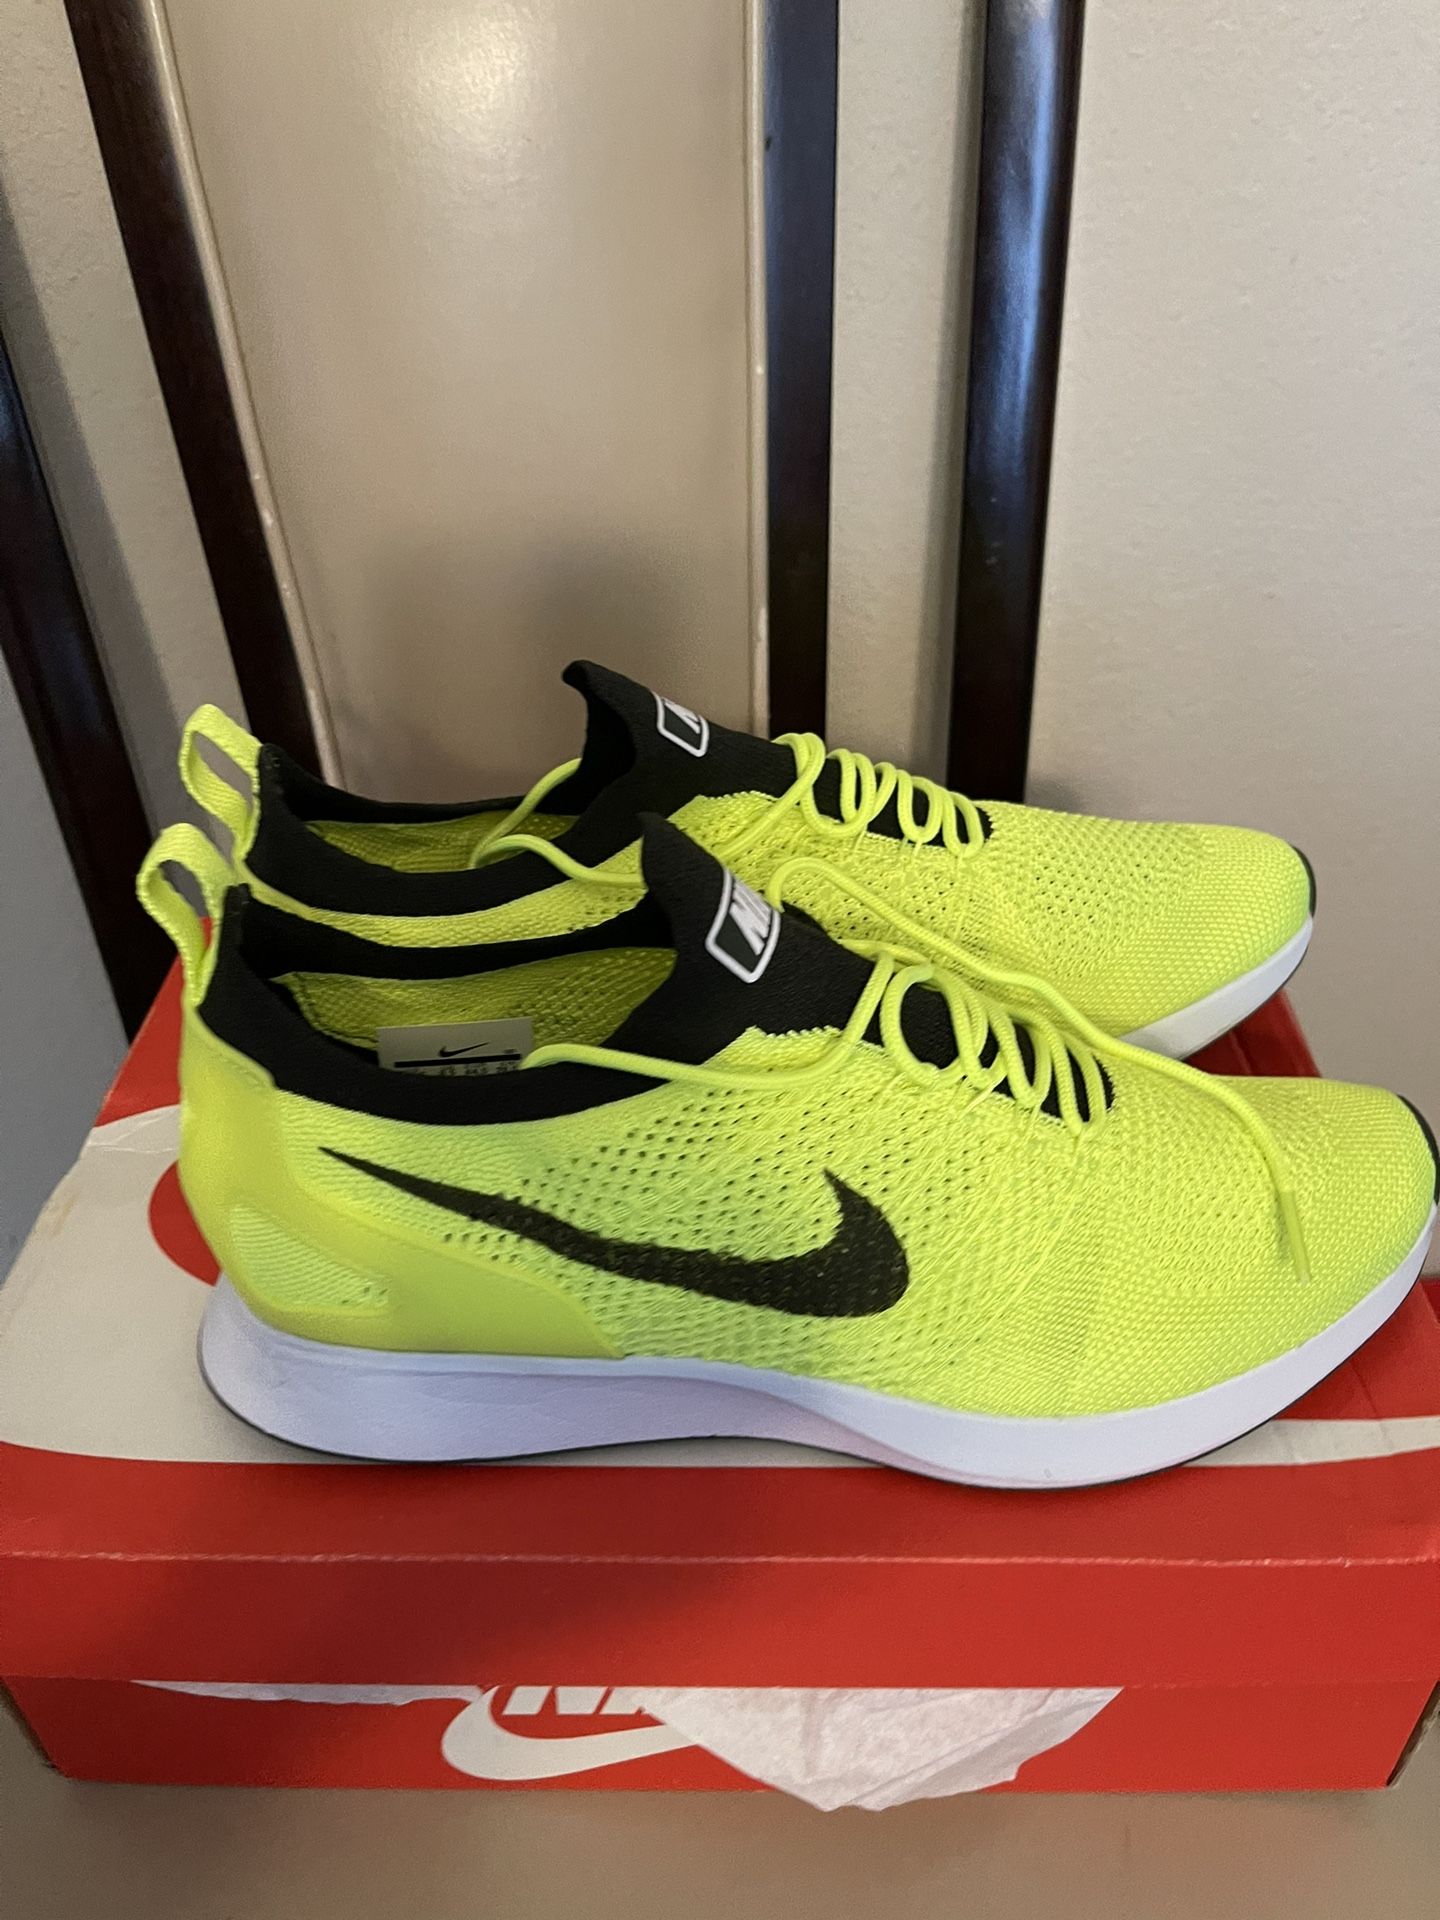 Neon Nike Running Shoes 